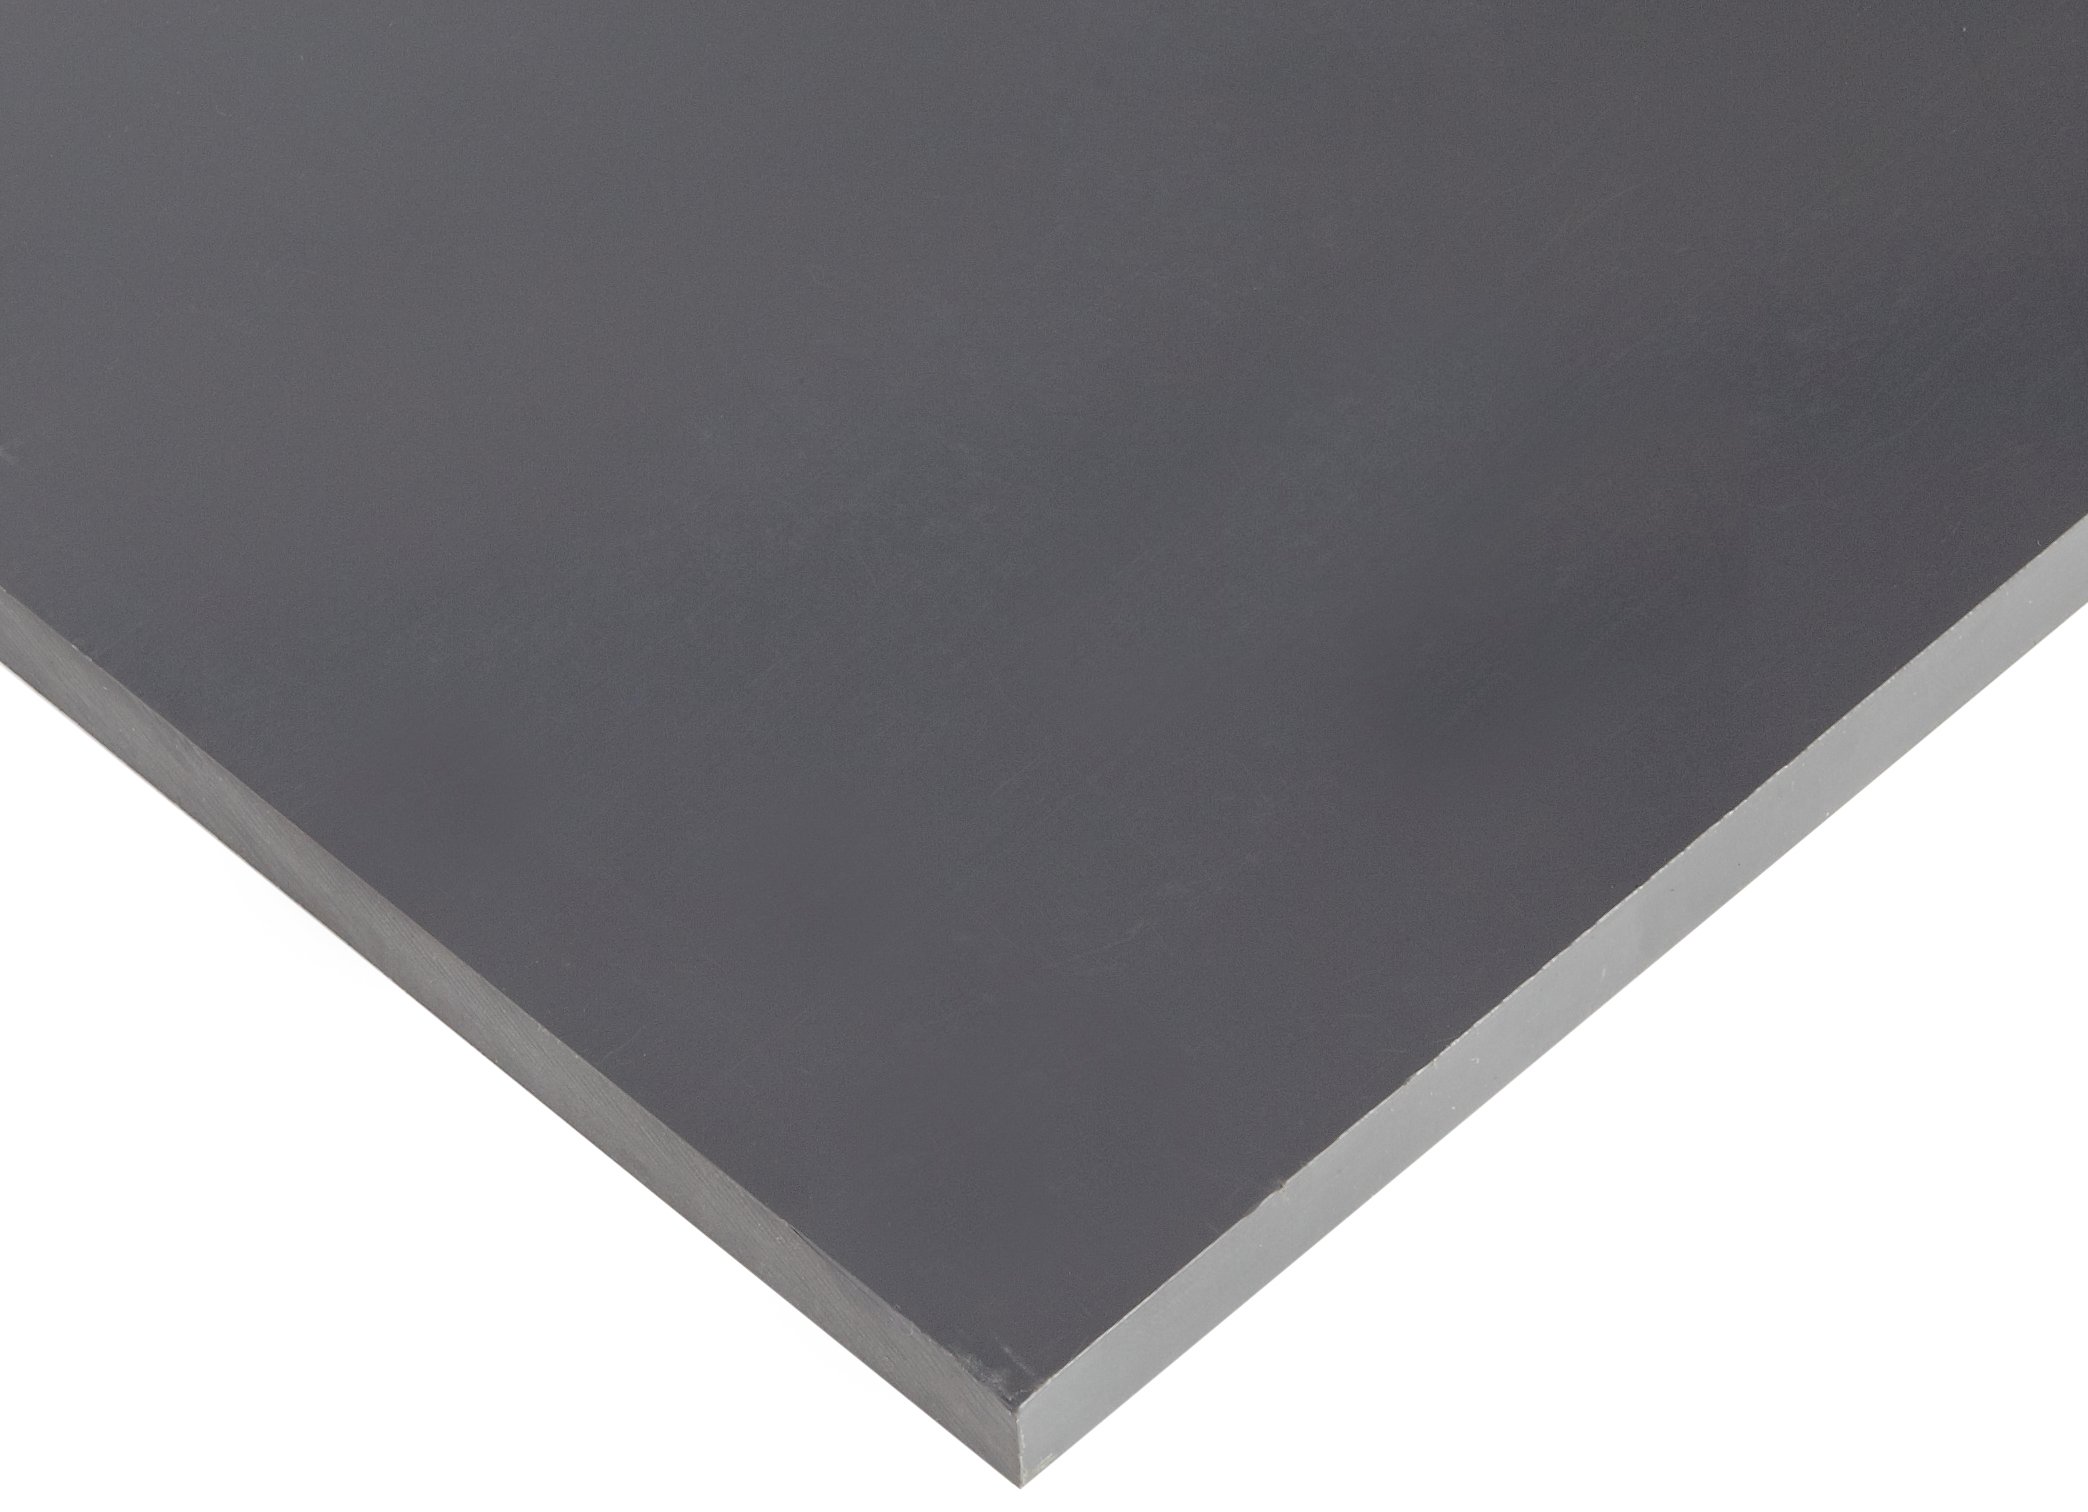 DARK GRAY EXP PVC 6mm 4x8FT - Gray Expanded PVC Sheets